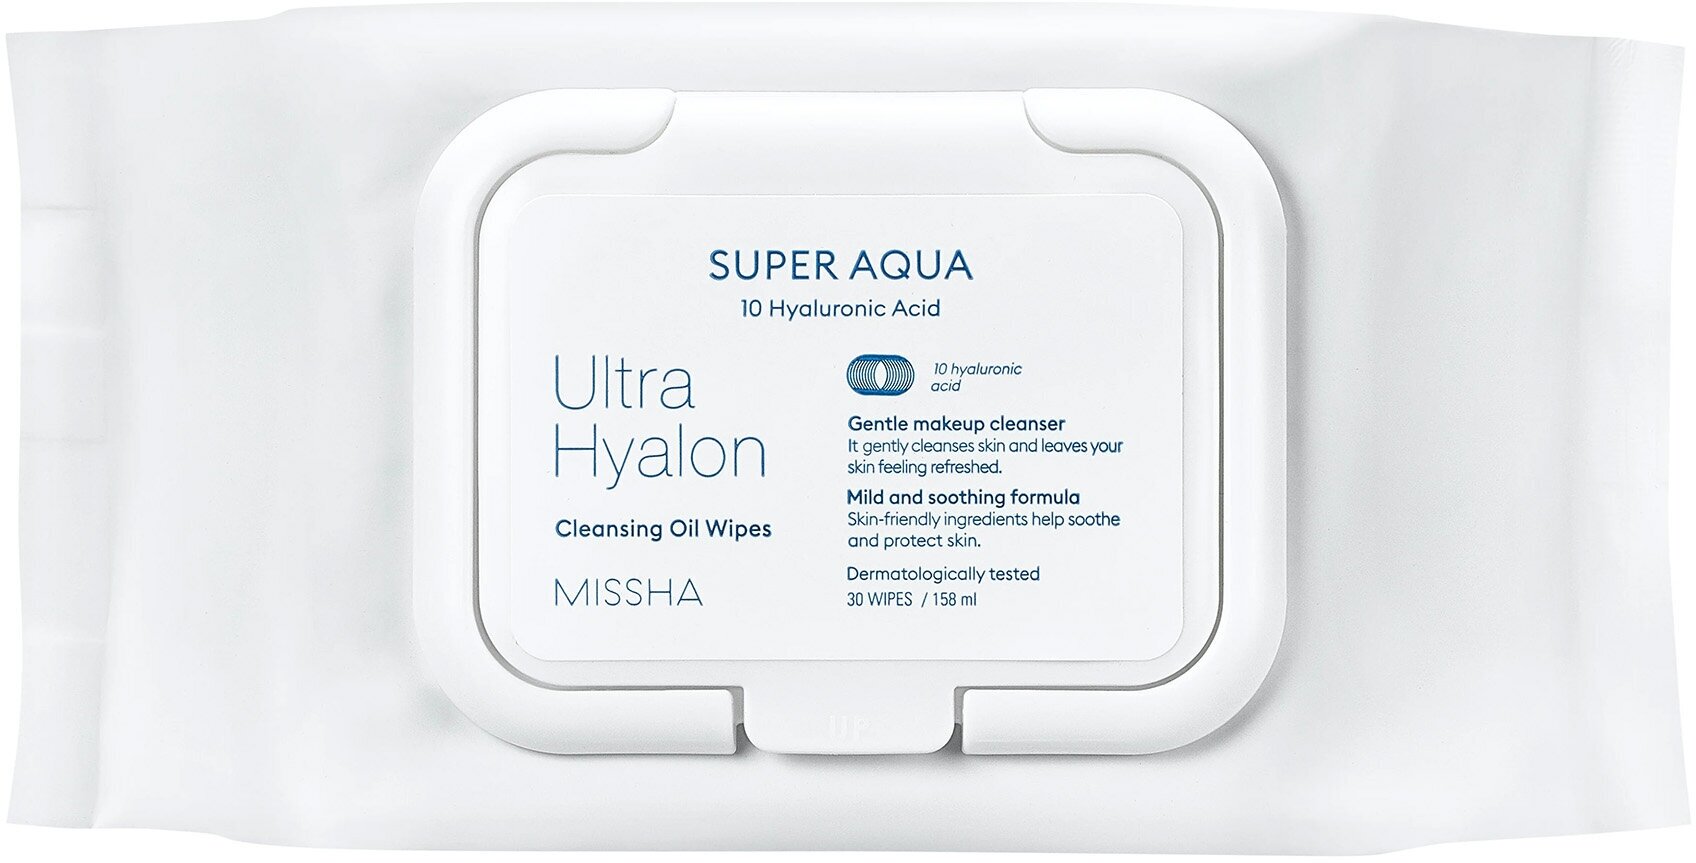 Очищающие салфетки с маслом и гиалуроновыми кислотами Missha Super Aqua Ultra Hyalron Cleansing Oil Wipes, 30 шт.